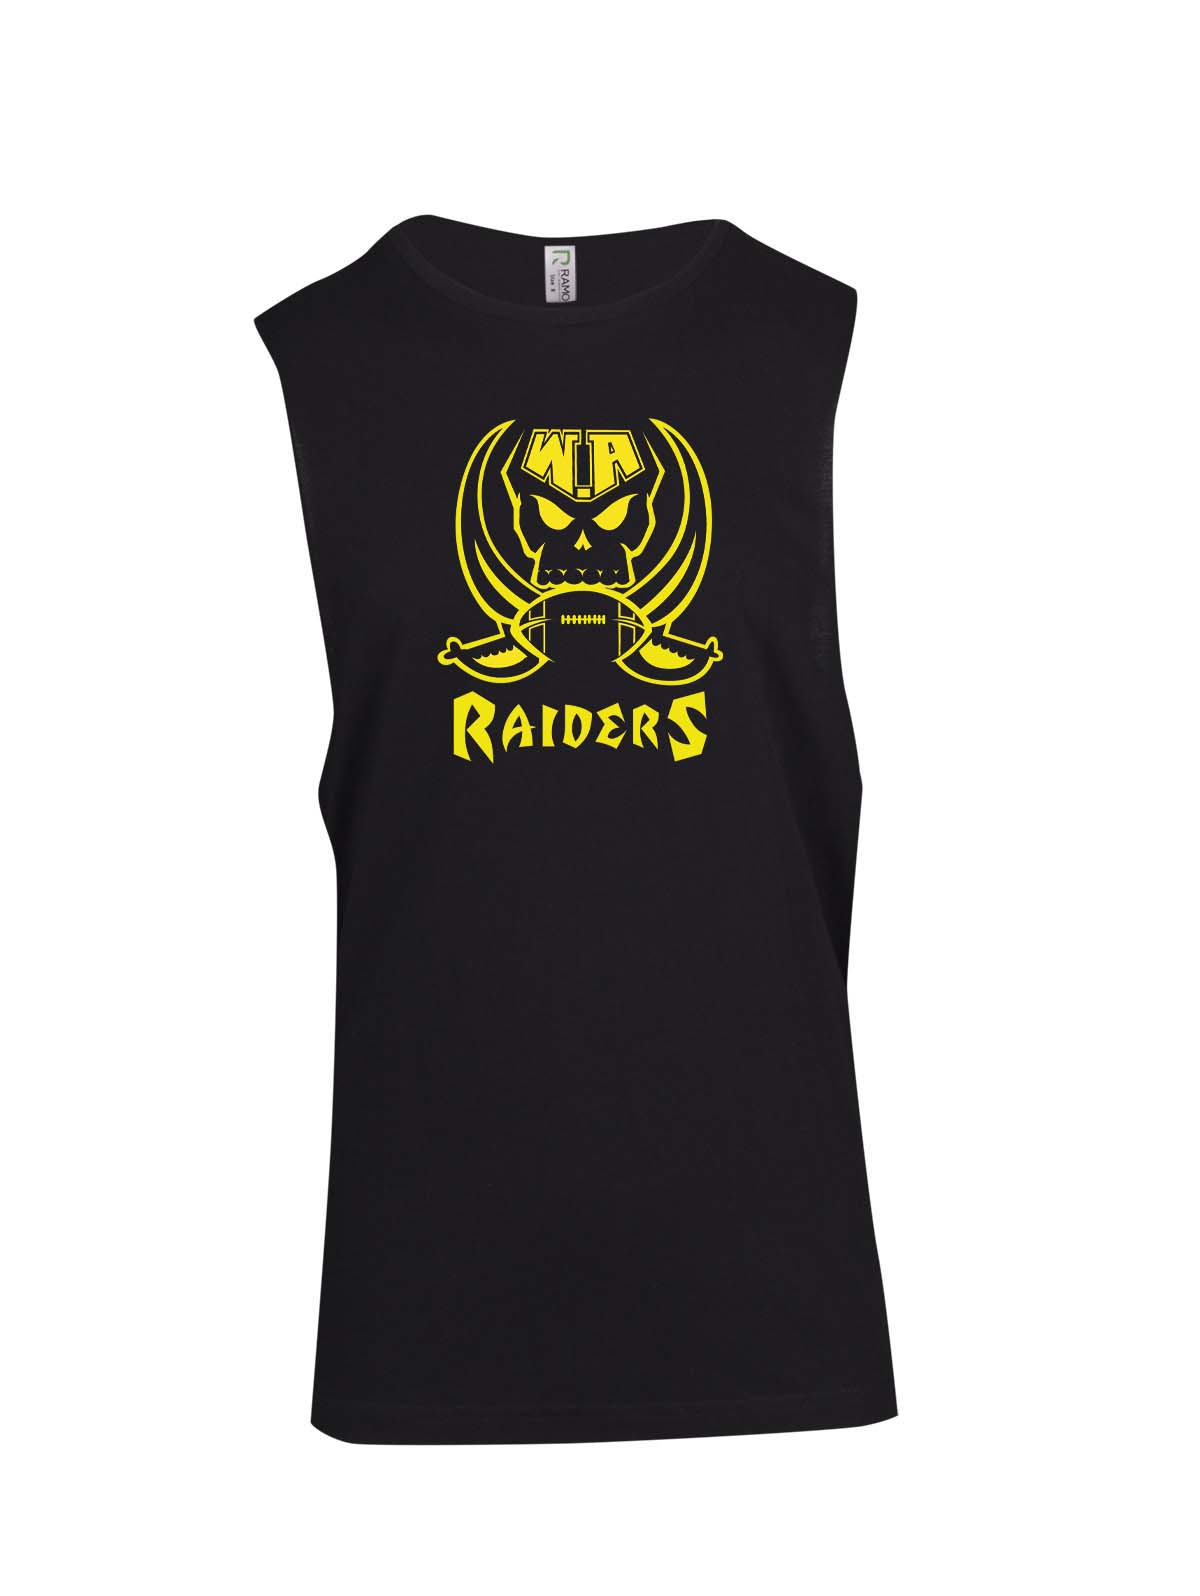 GW Raiders Logo Muscle Shirt